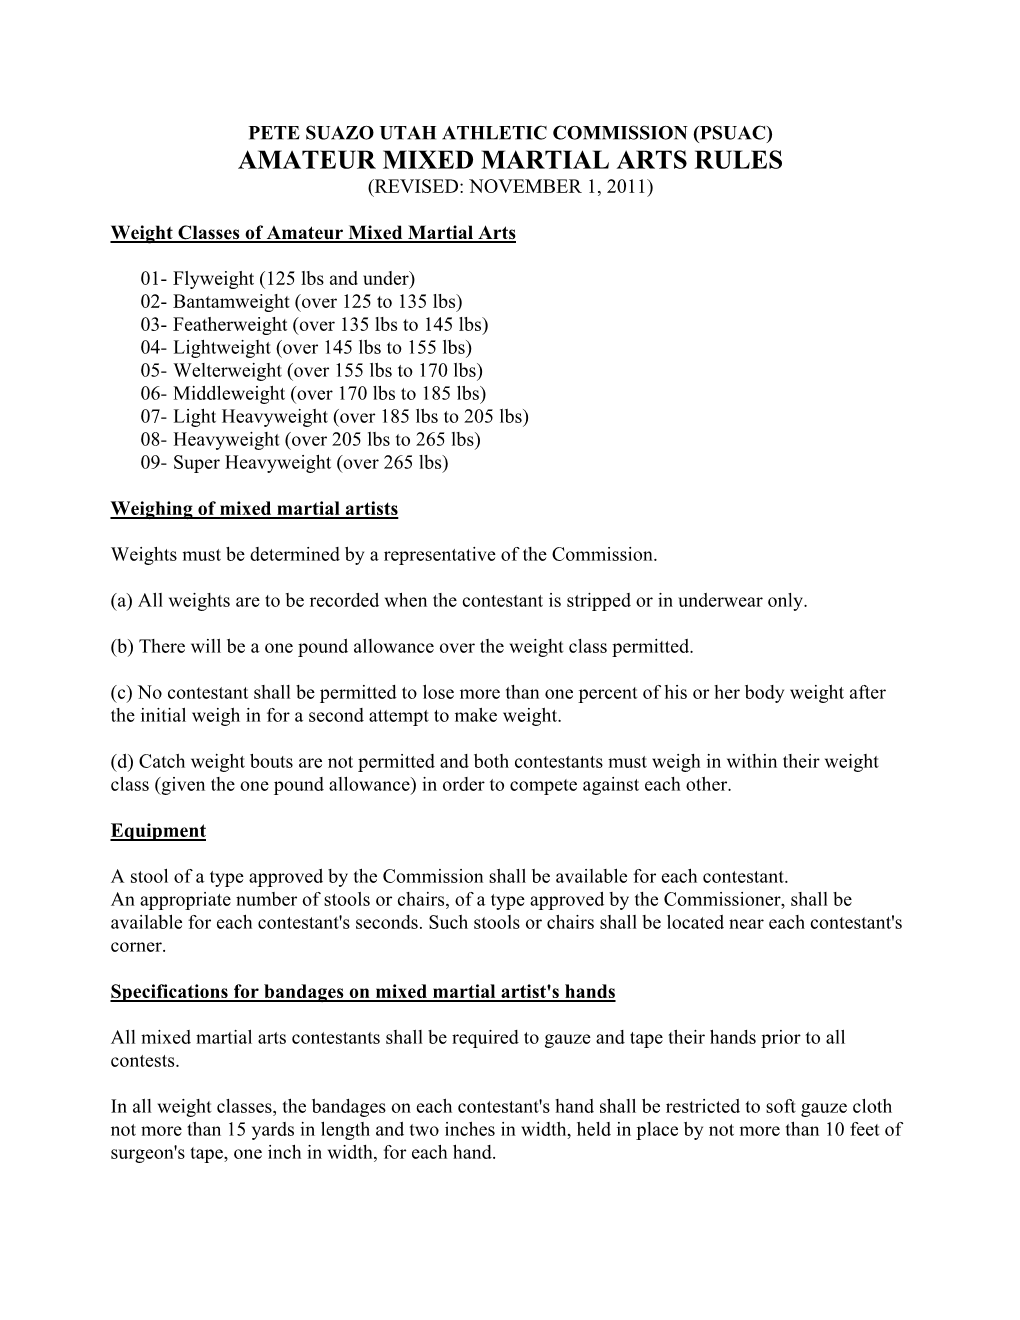 Amateur Mixed Martial Arts Rules (Revised: November 1, 2011)